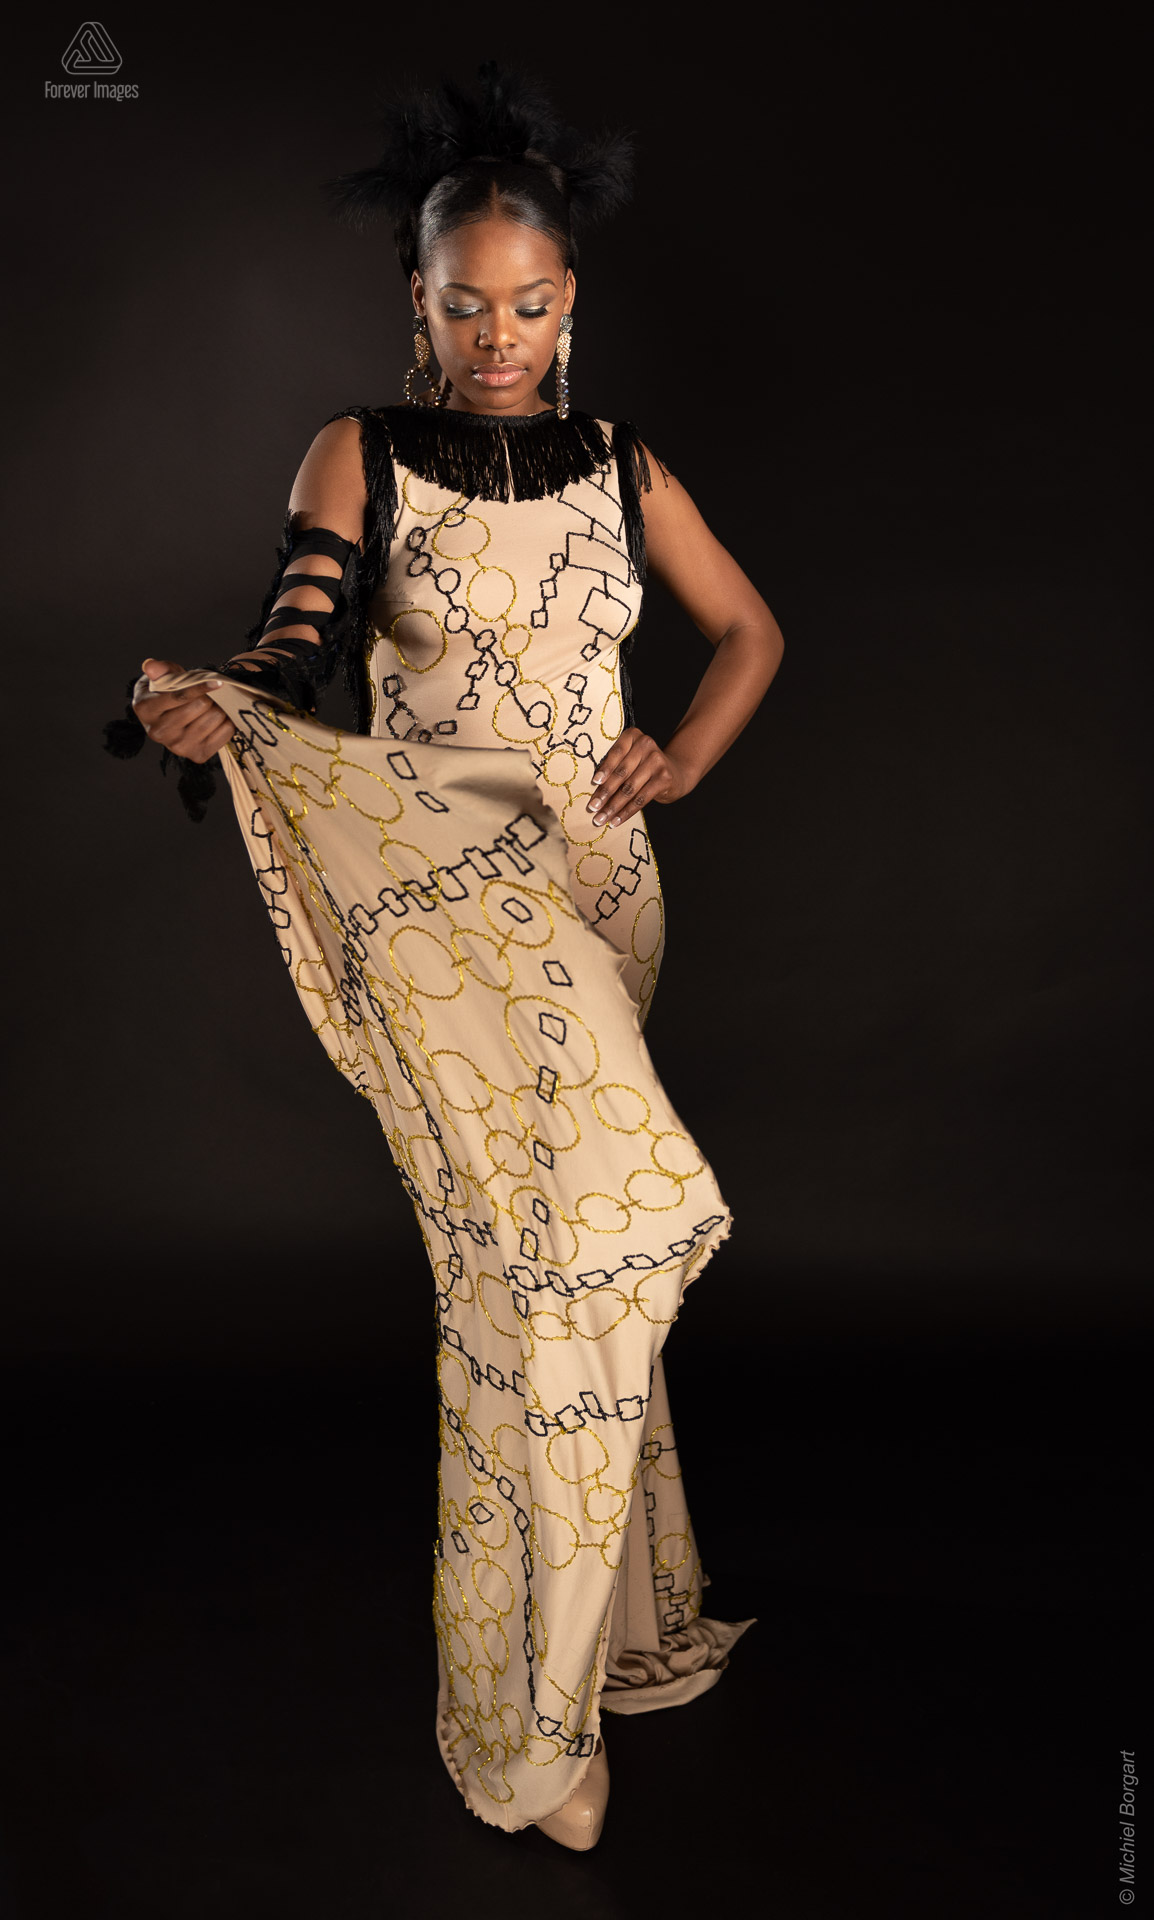 Fashionfoto beige zwarte jurk totaal beneden | Mariangel Dolorita Miss Reina Seu Ronald Rizzo Piu Colore | Fashionfotograaf Michiel Borgart - Forever Images.